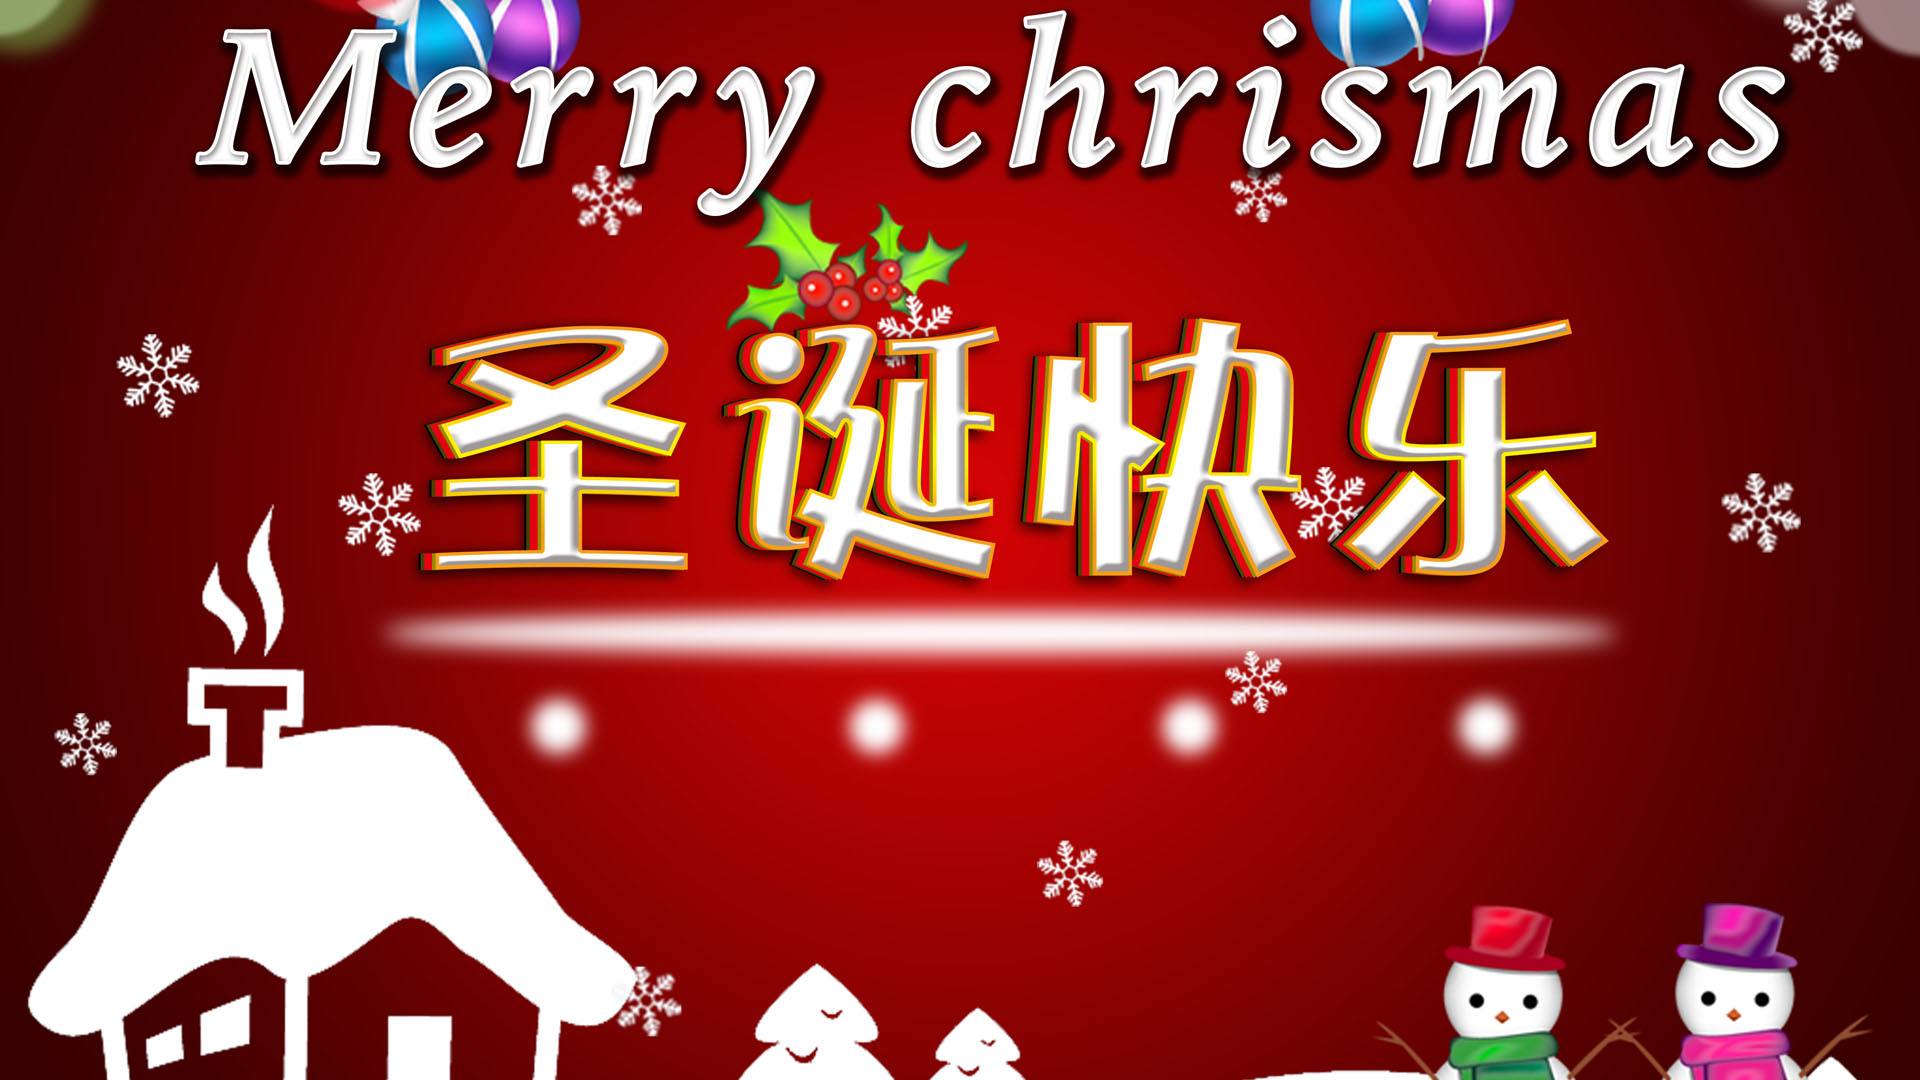 Merry Christmas theme desktop wallpaper